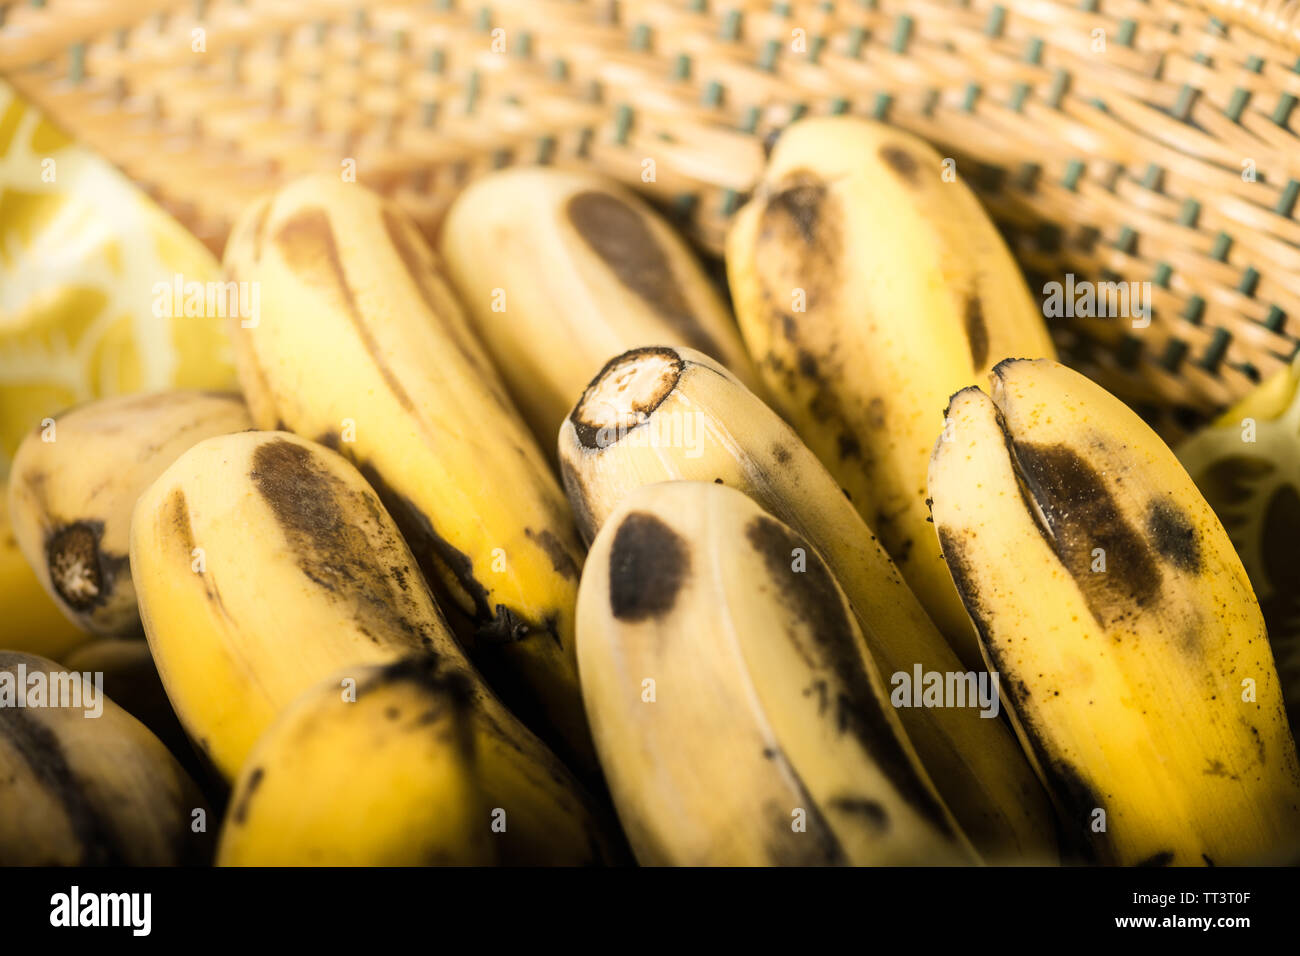 Ripe bananas.Banana with dark spots with shadow in basket.Yellow fruit. Closeup shot selective focus. Stock Photo